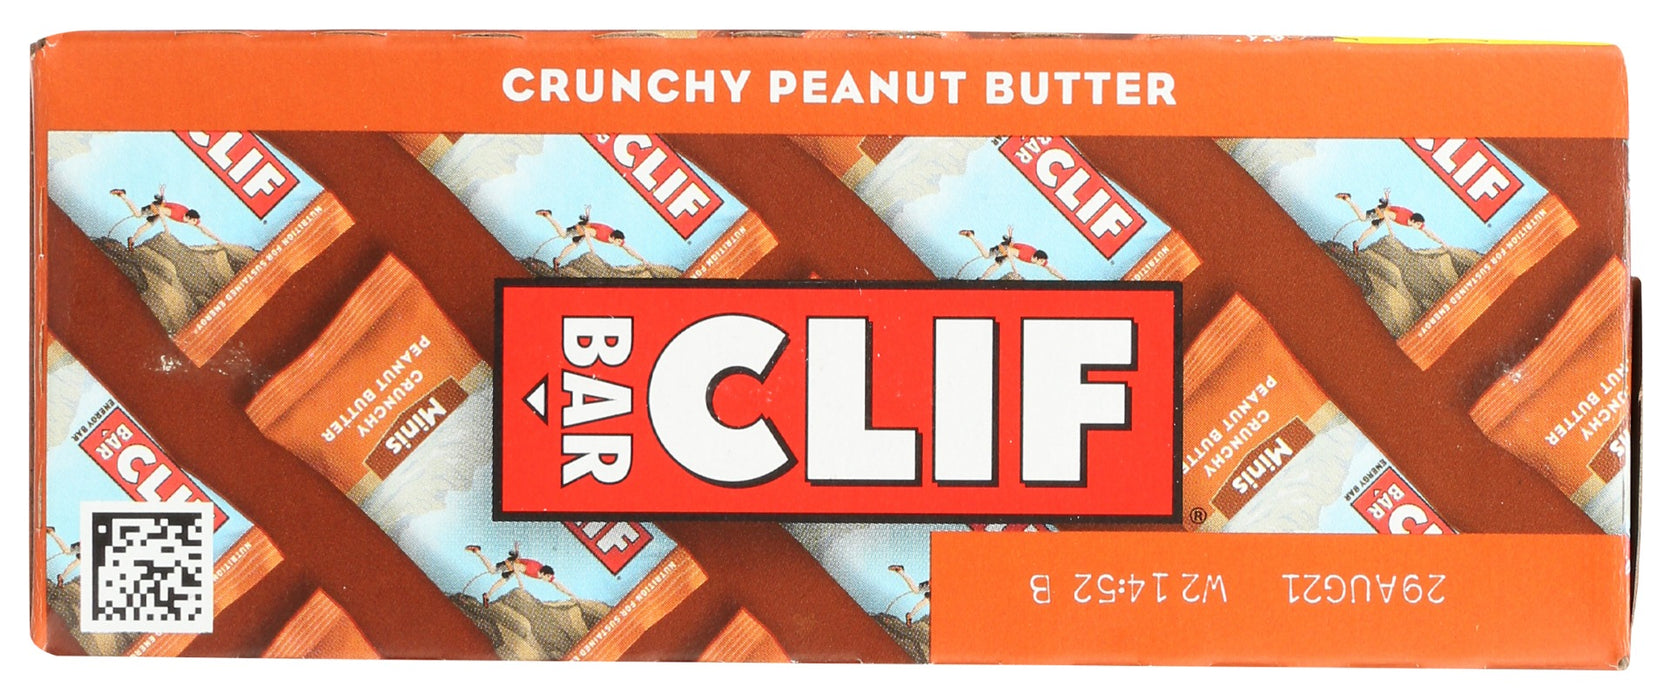 CLIF: Mini Crunchy Peanut Butter Bars, 9.9 oz